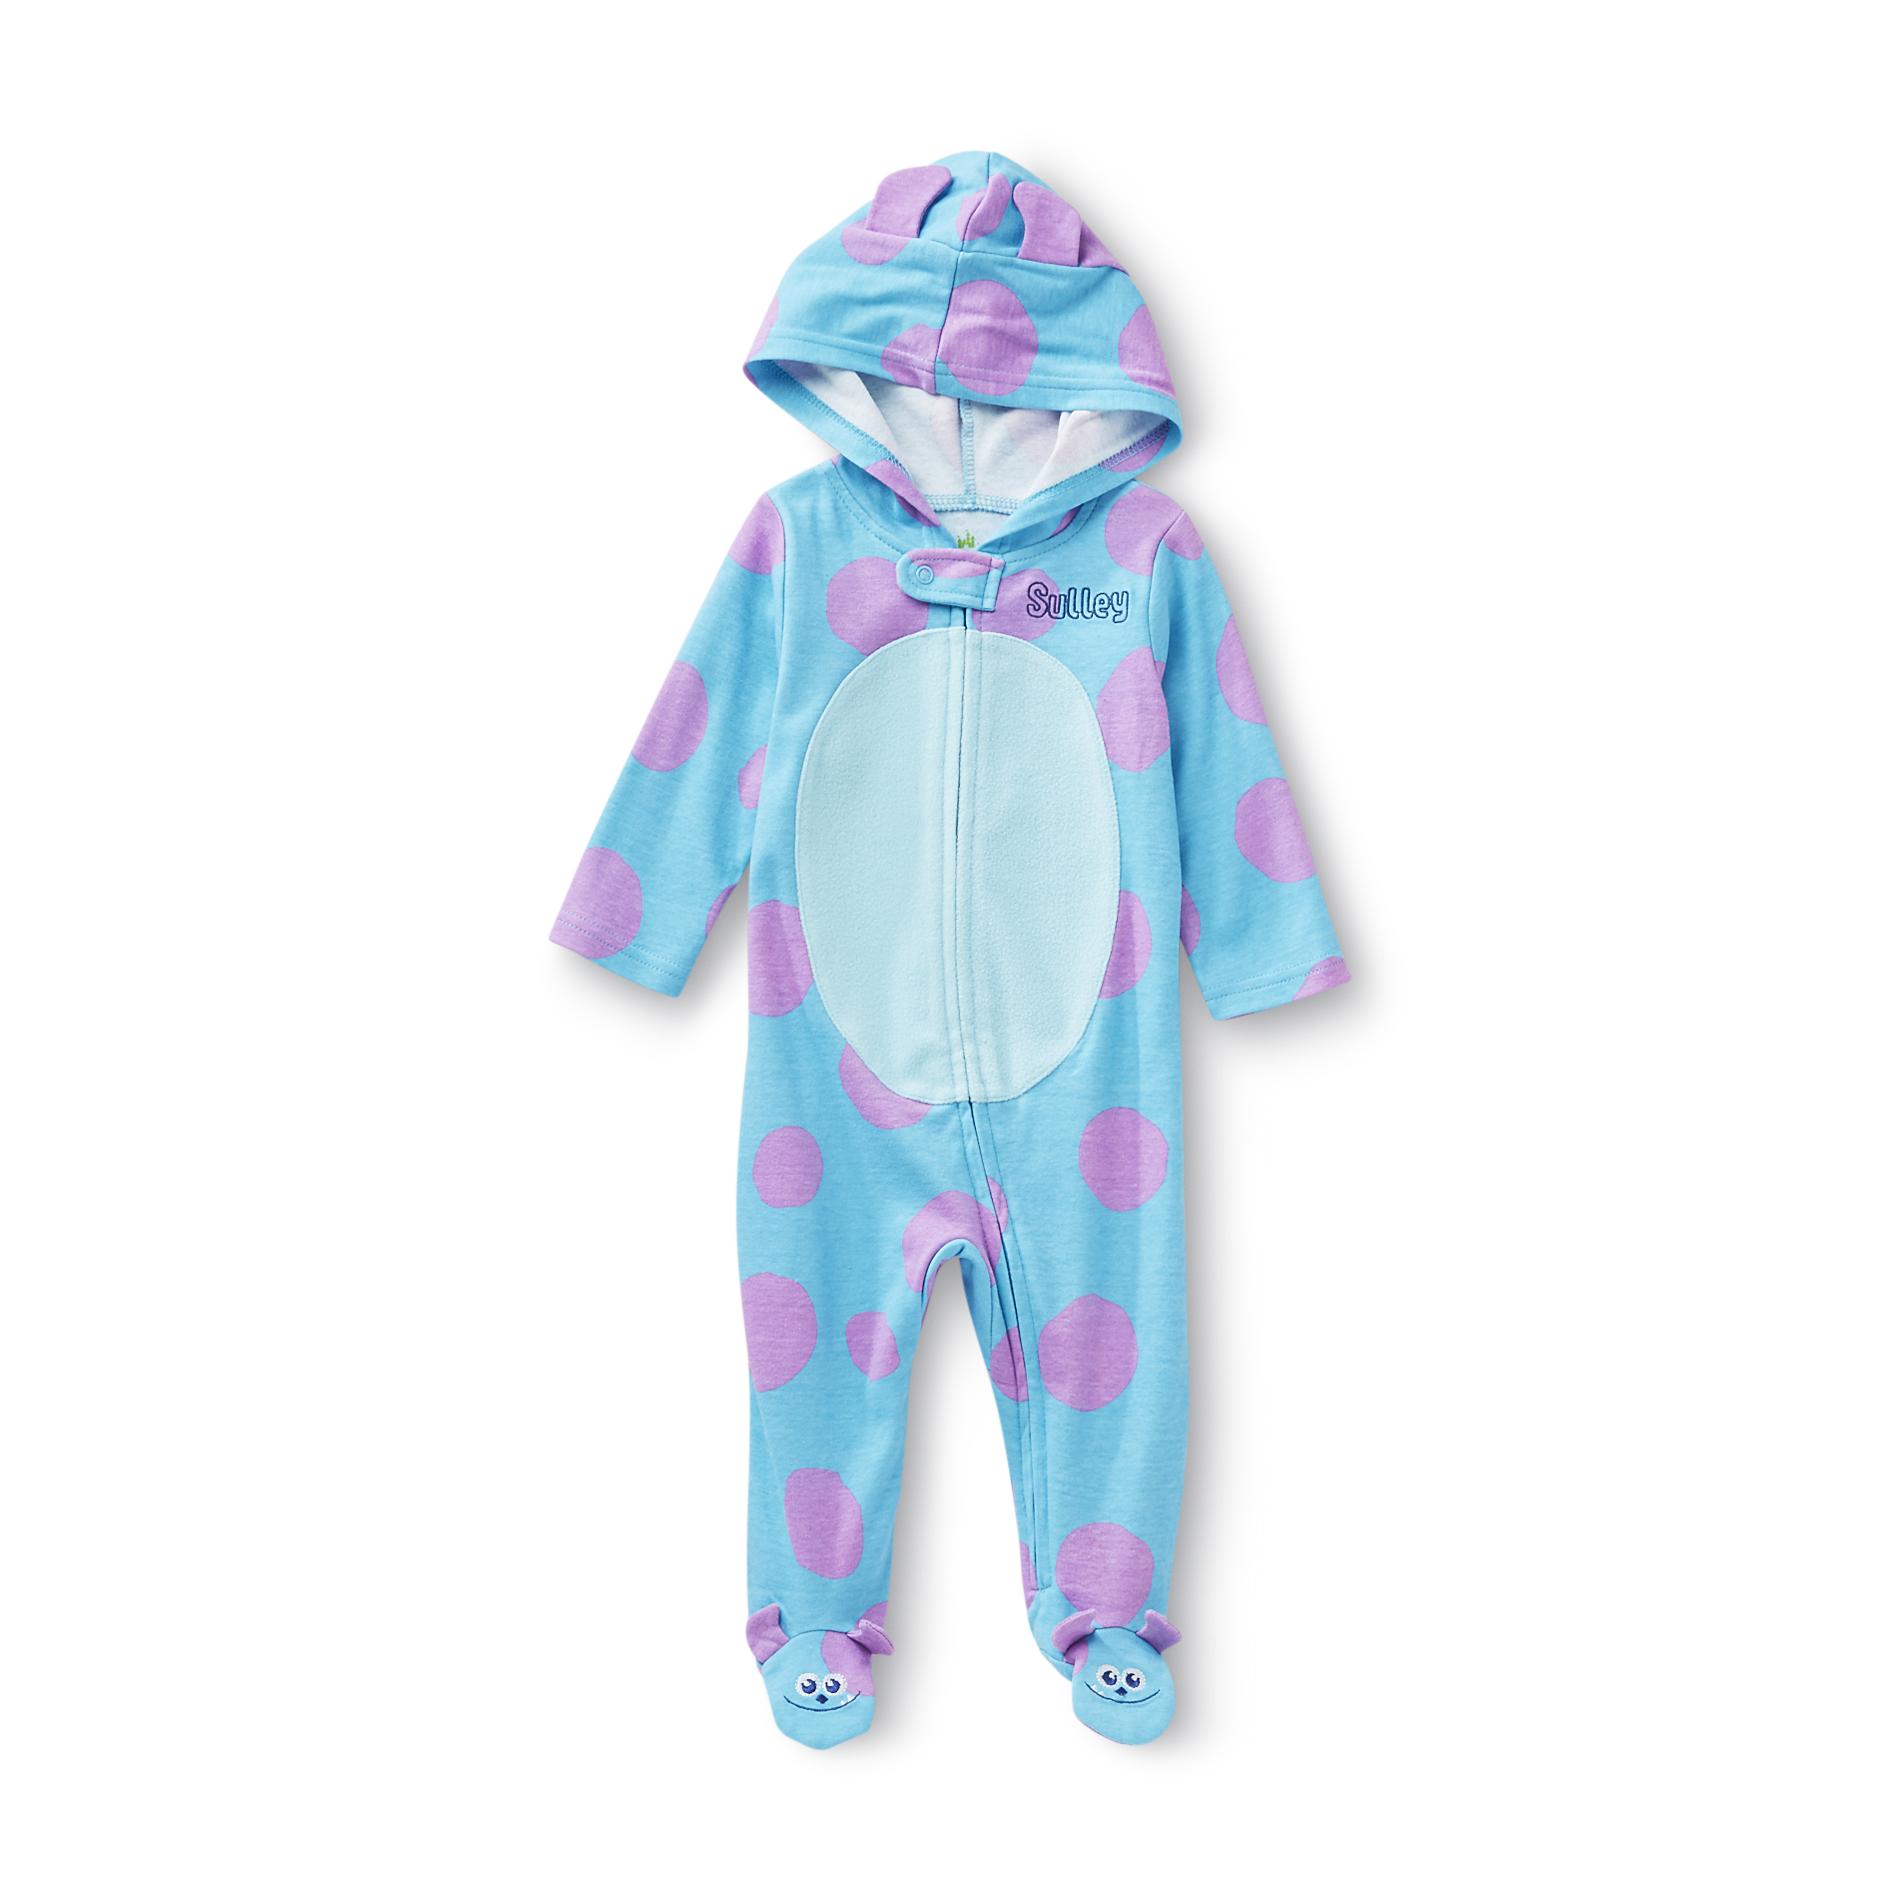 Disney Infant Boy's Hooded Sleeper - Monsters Inc.